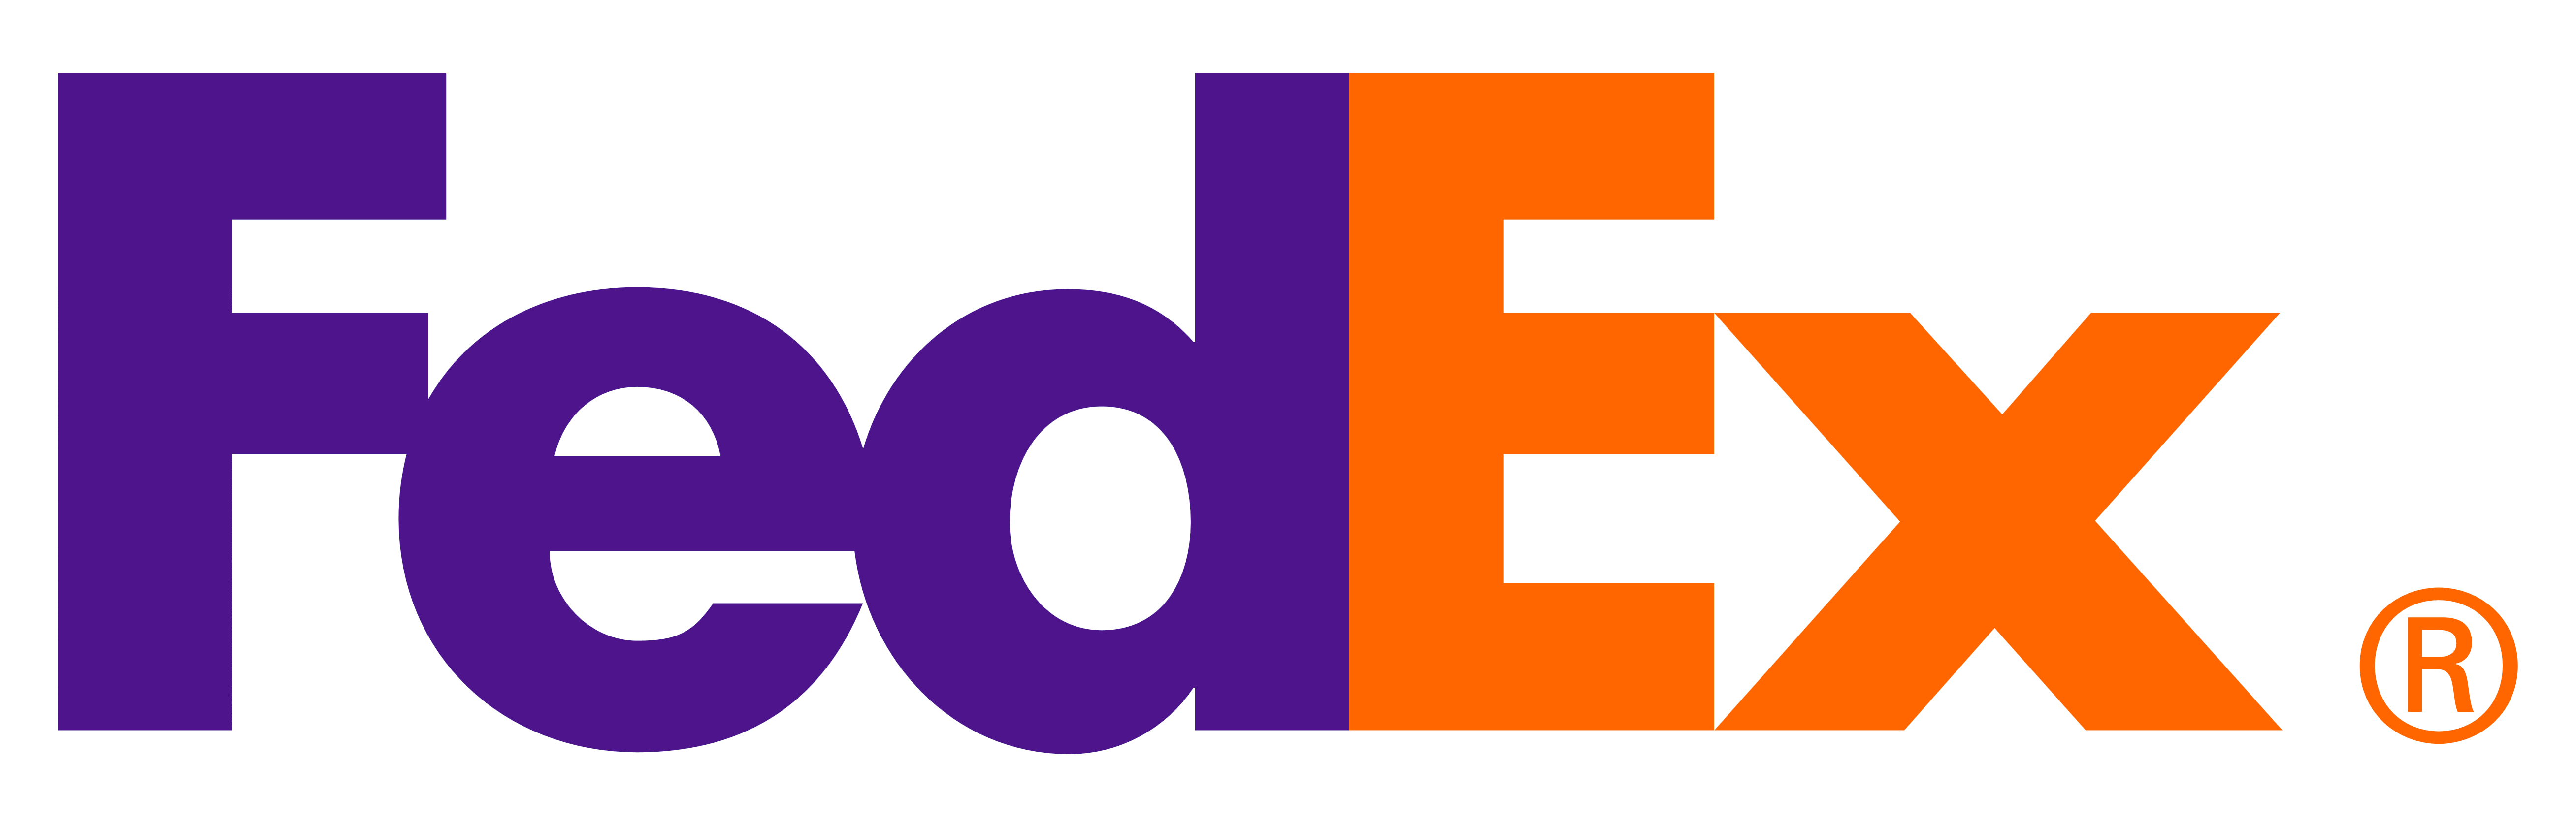 FedEx Office New Logo - FedEx-Logo-PNG-Transparent - National Weather AssociationNational ...